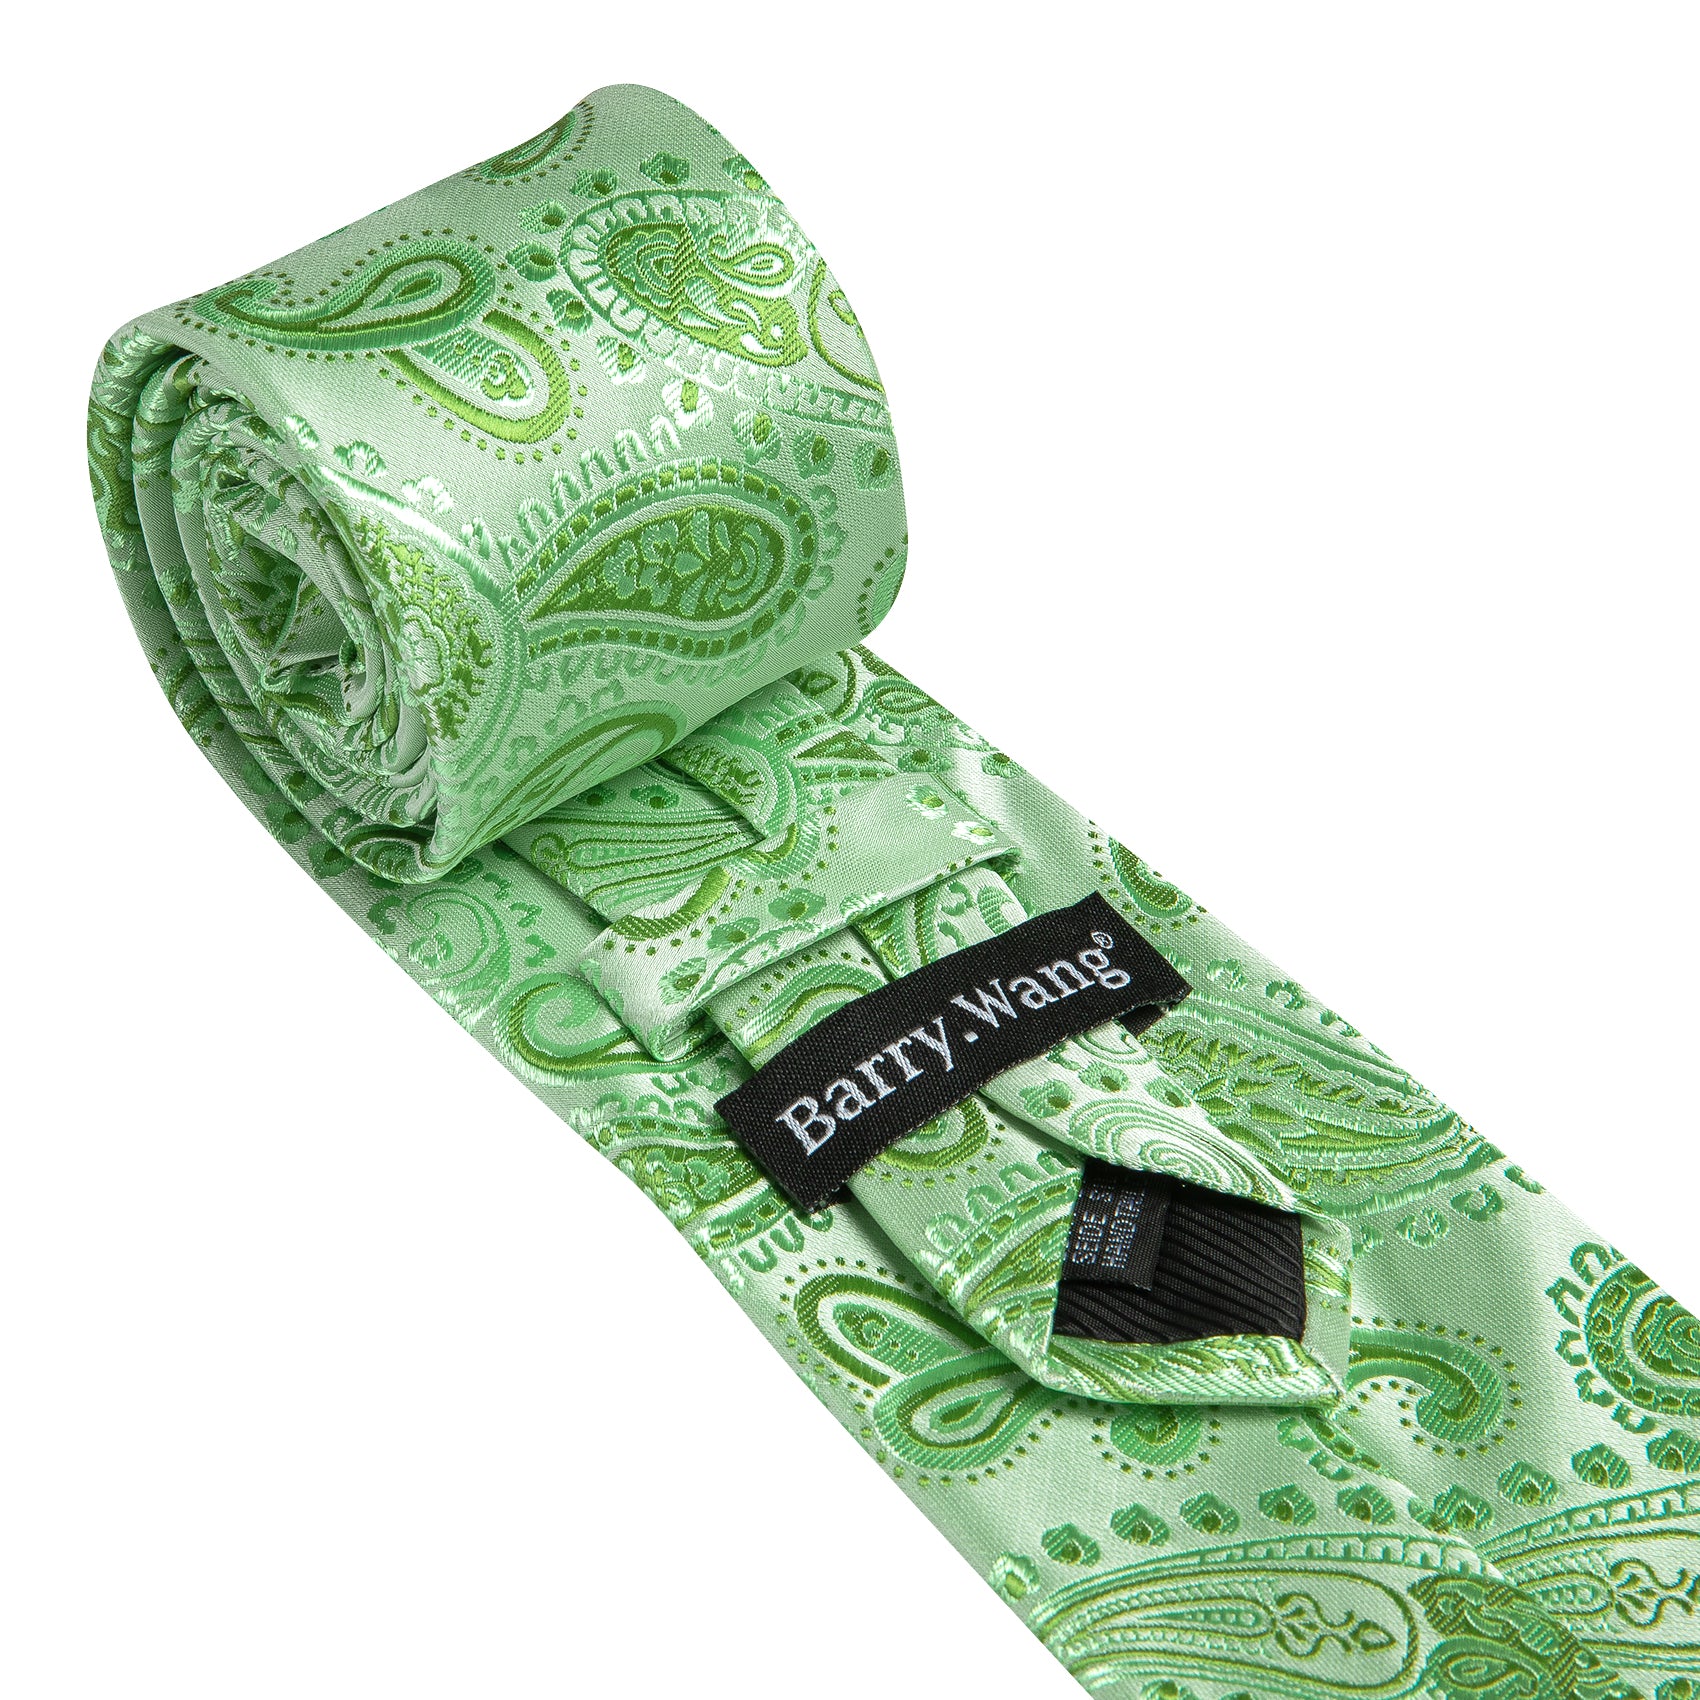 Barry Wang Turquoise Green Paisley Silk Tie Handkerchief Cufflinks Set